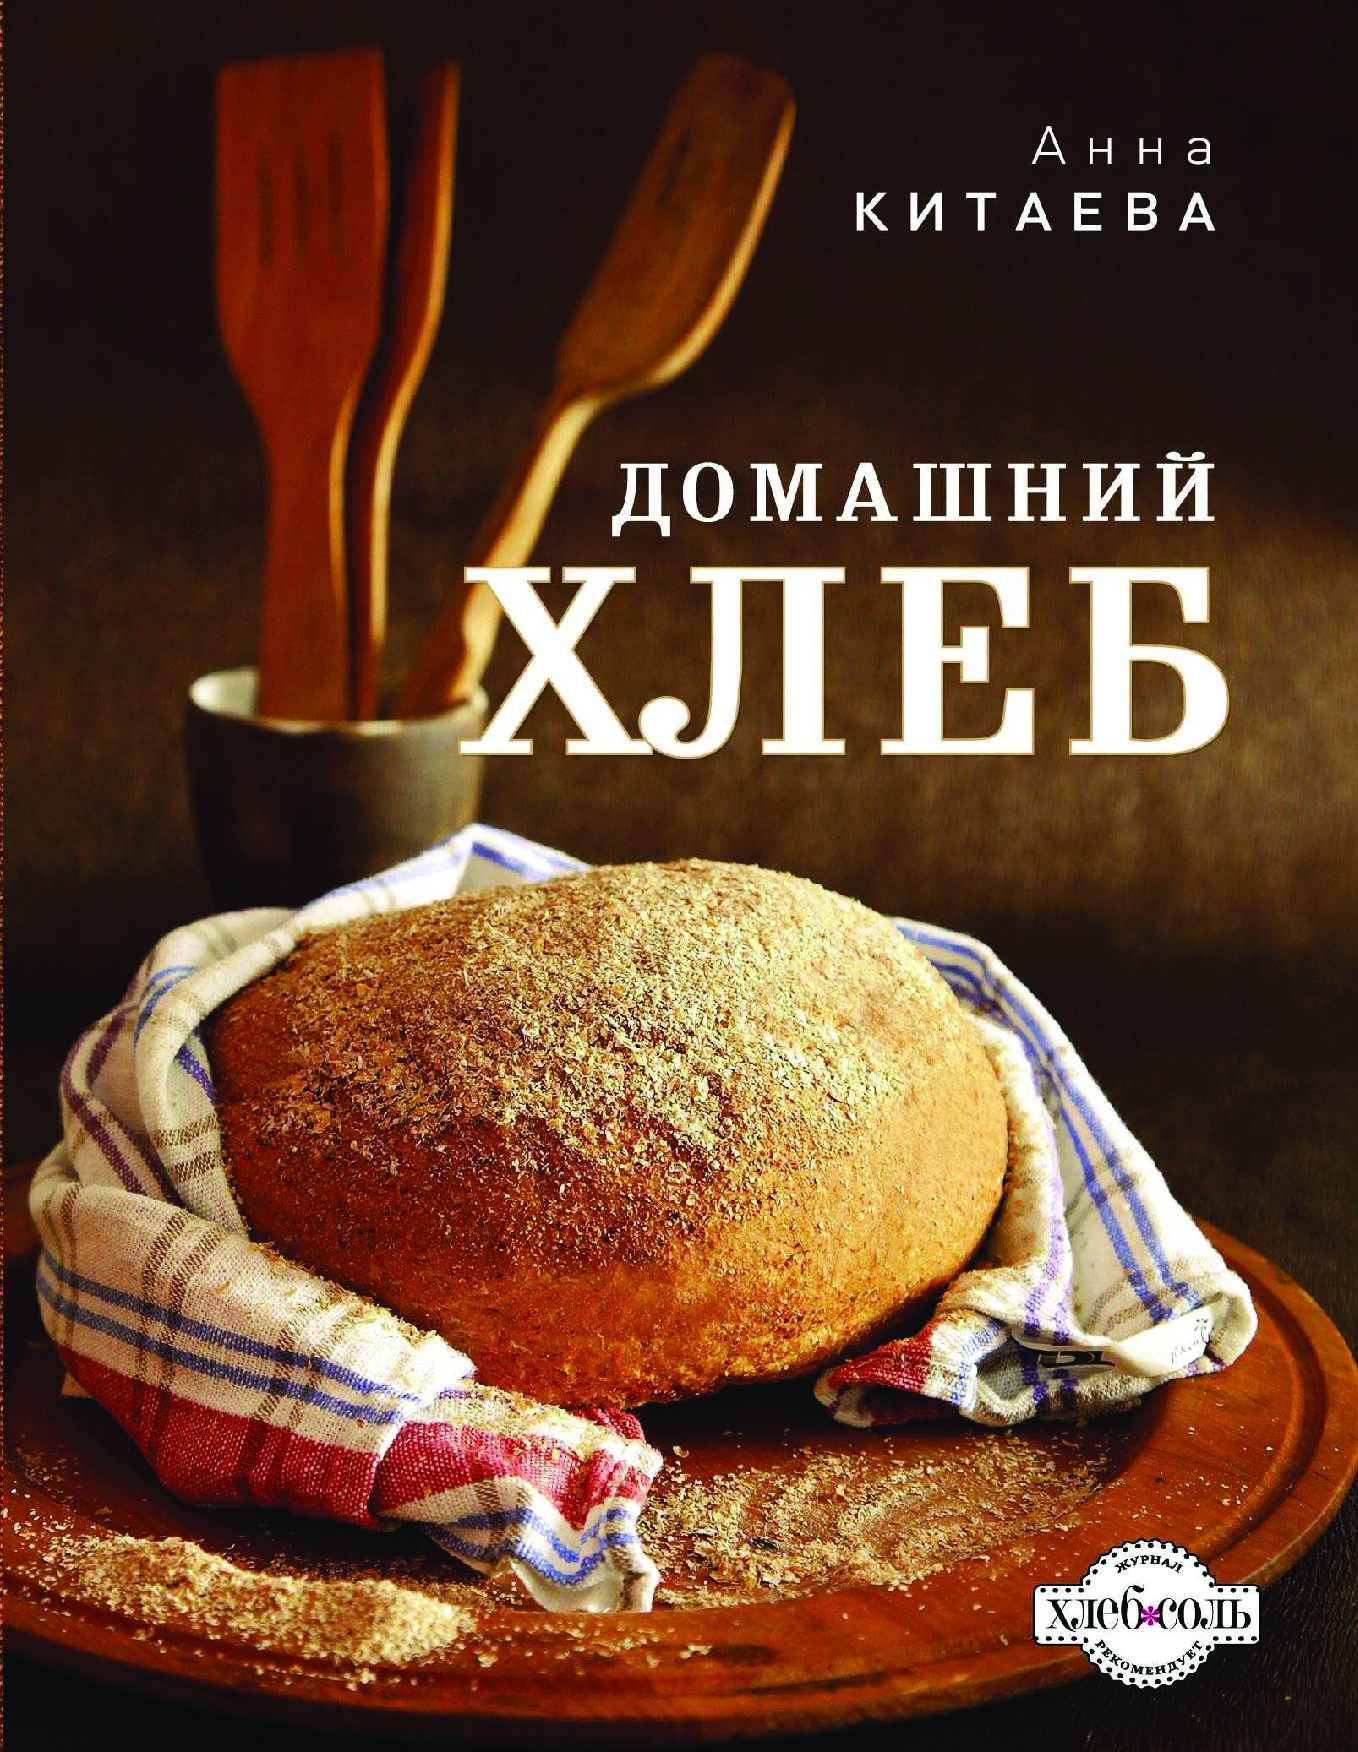 Книга рецептов хлеба. Хлеб. Домашний хлеб. Реклама хлеба. Книги о хлебе.